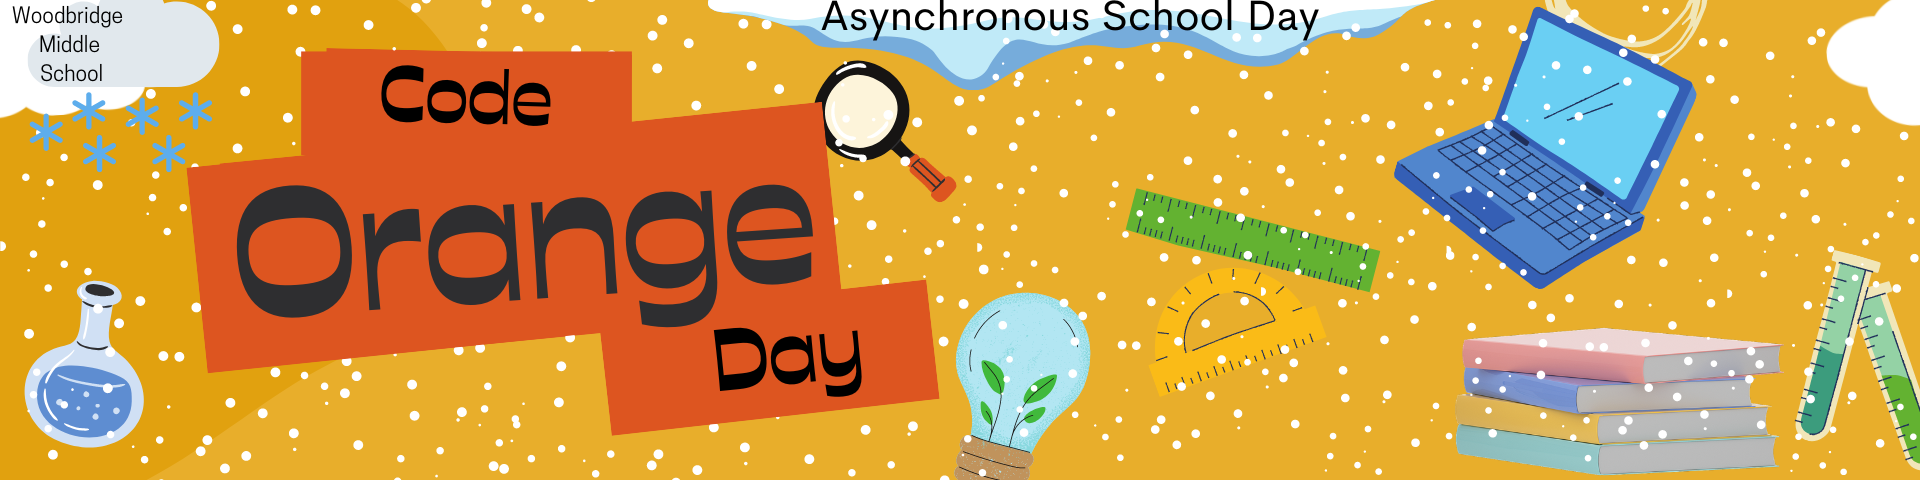 WMS Code Orange Day Asynchronous School Day